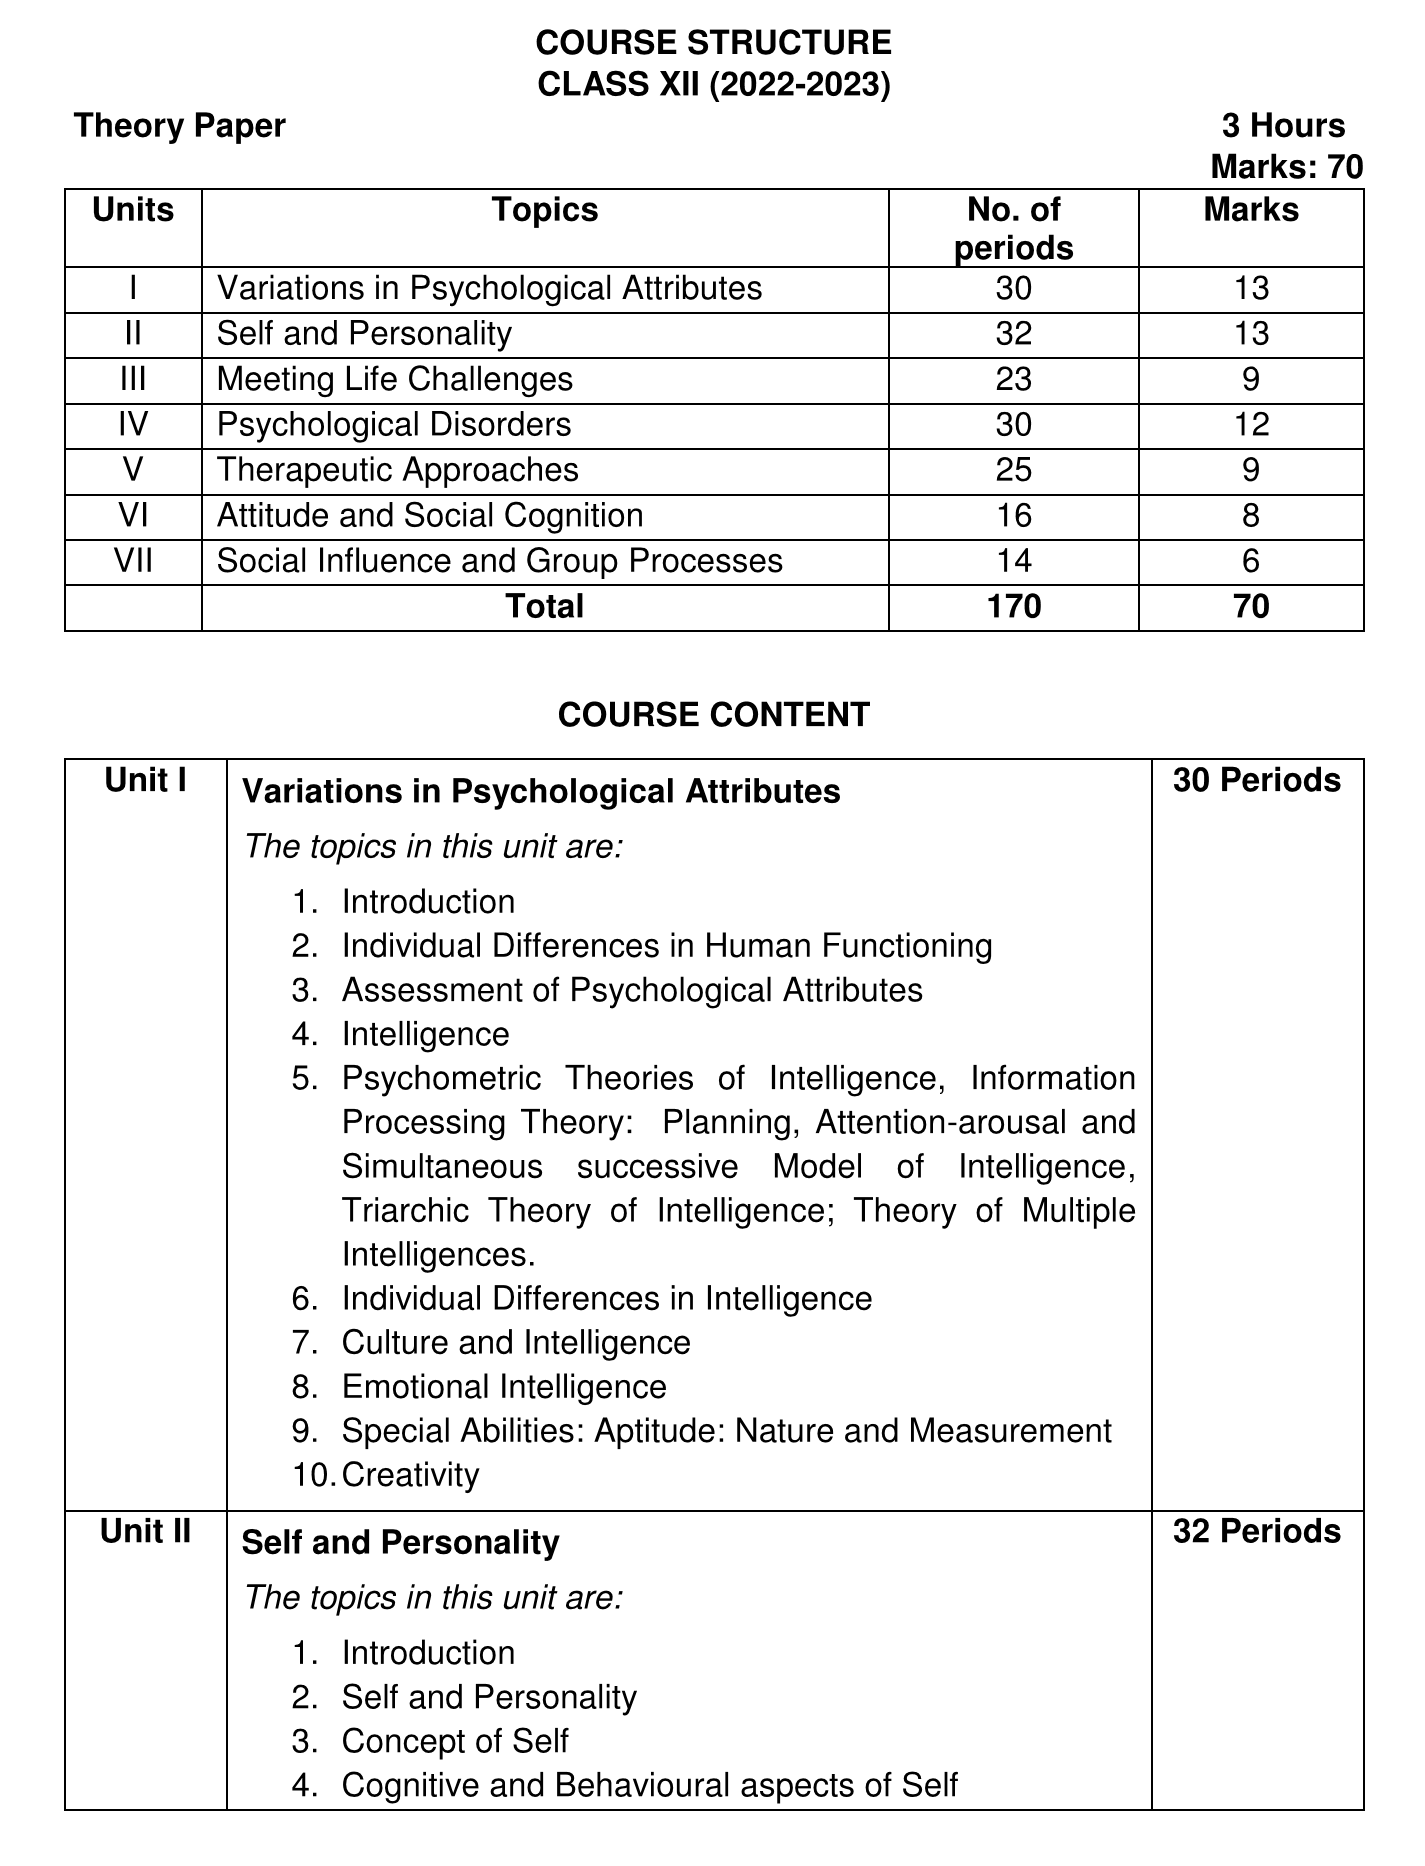 CBSE Class 12 Psychology Syllabus 2022-23